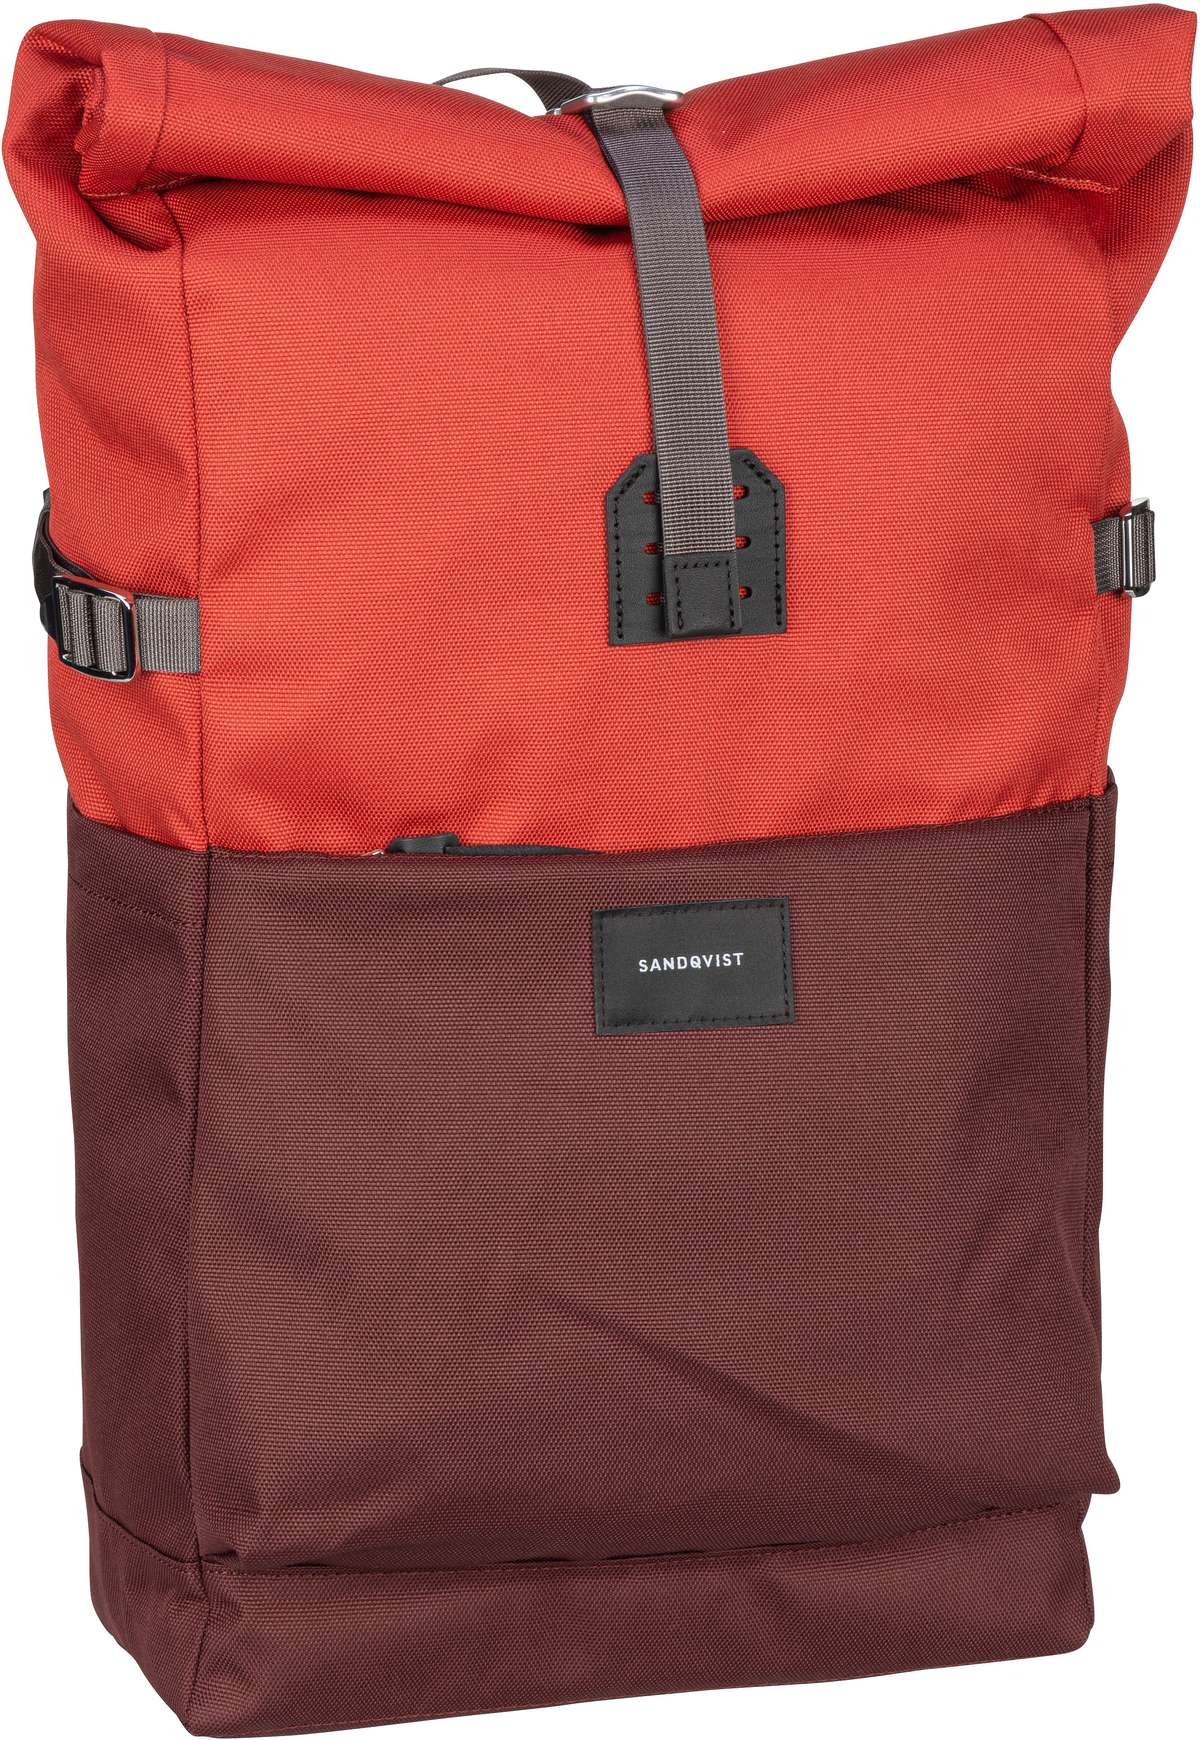 Sandqvist Ilon Rolltop Backpack - Multi Moss Red/Black Leather